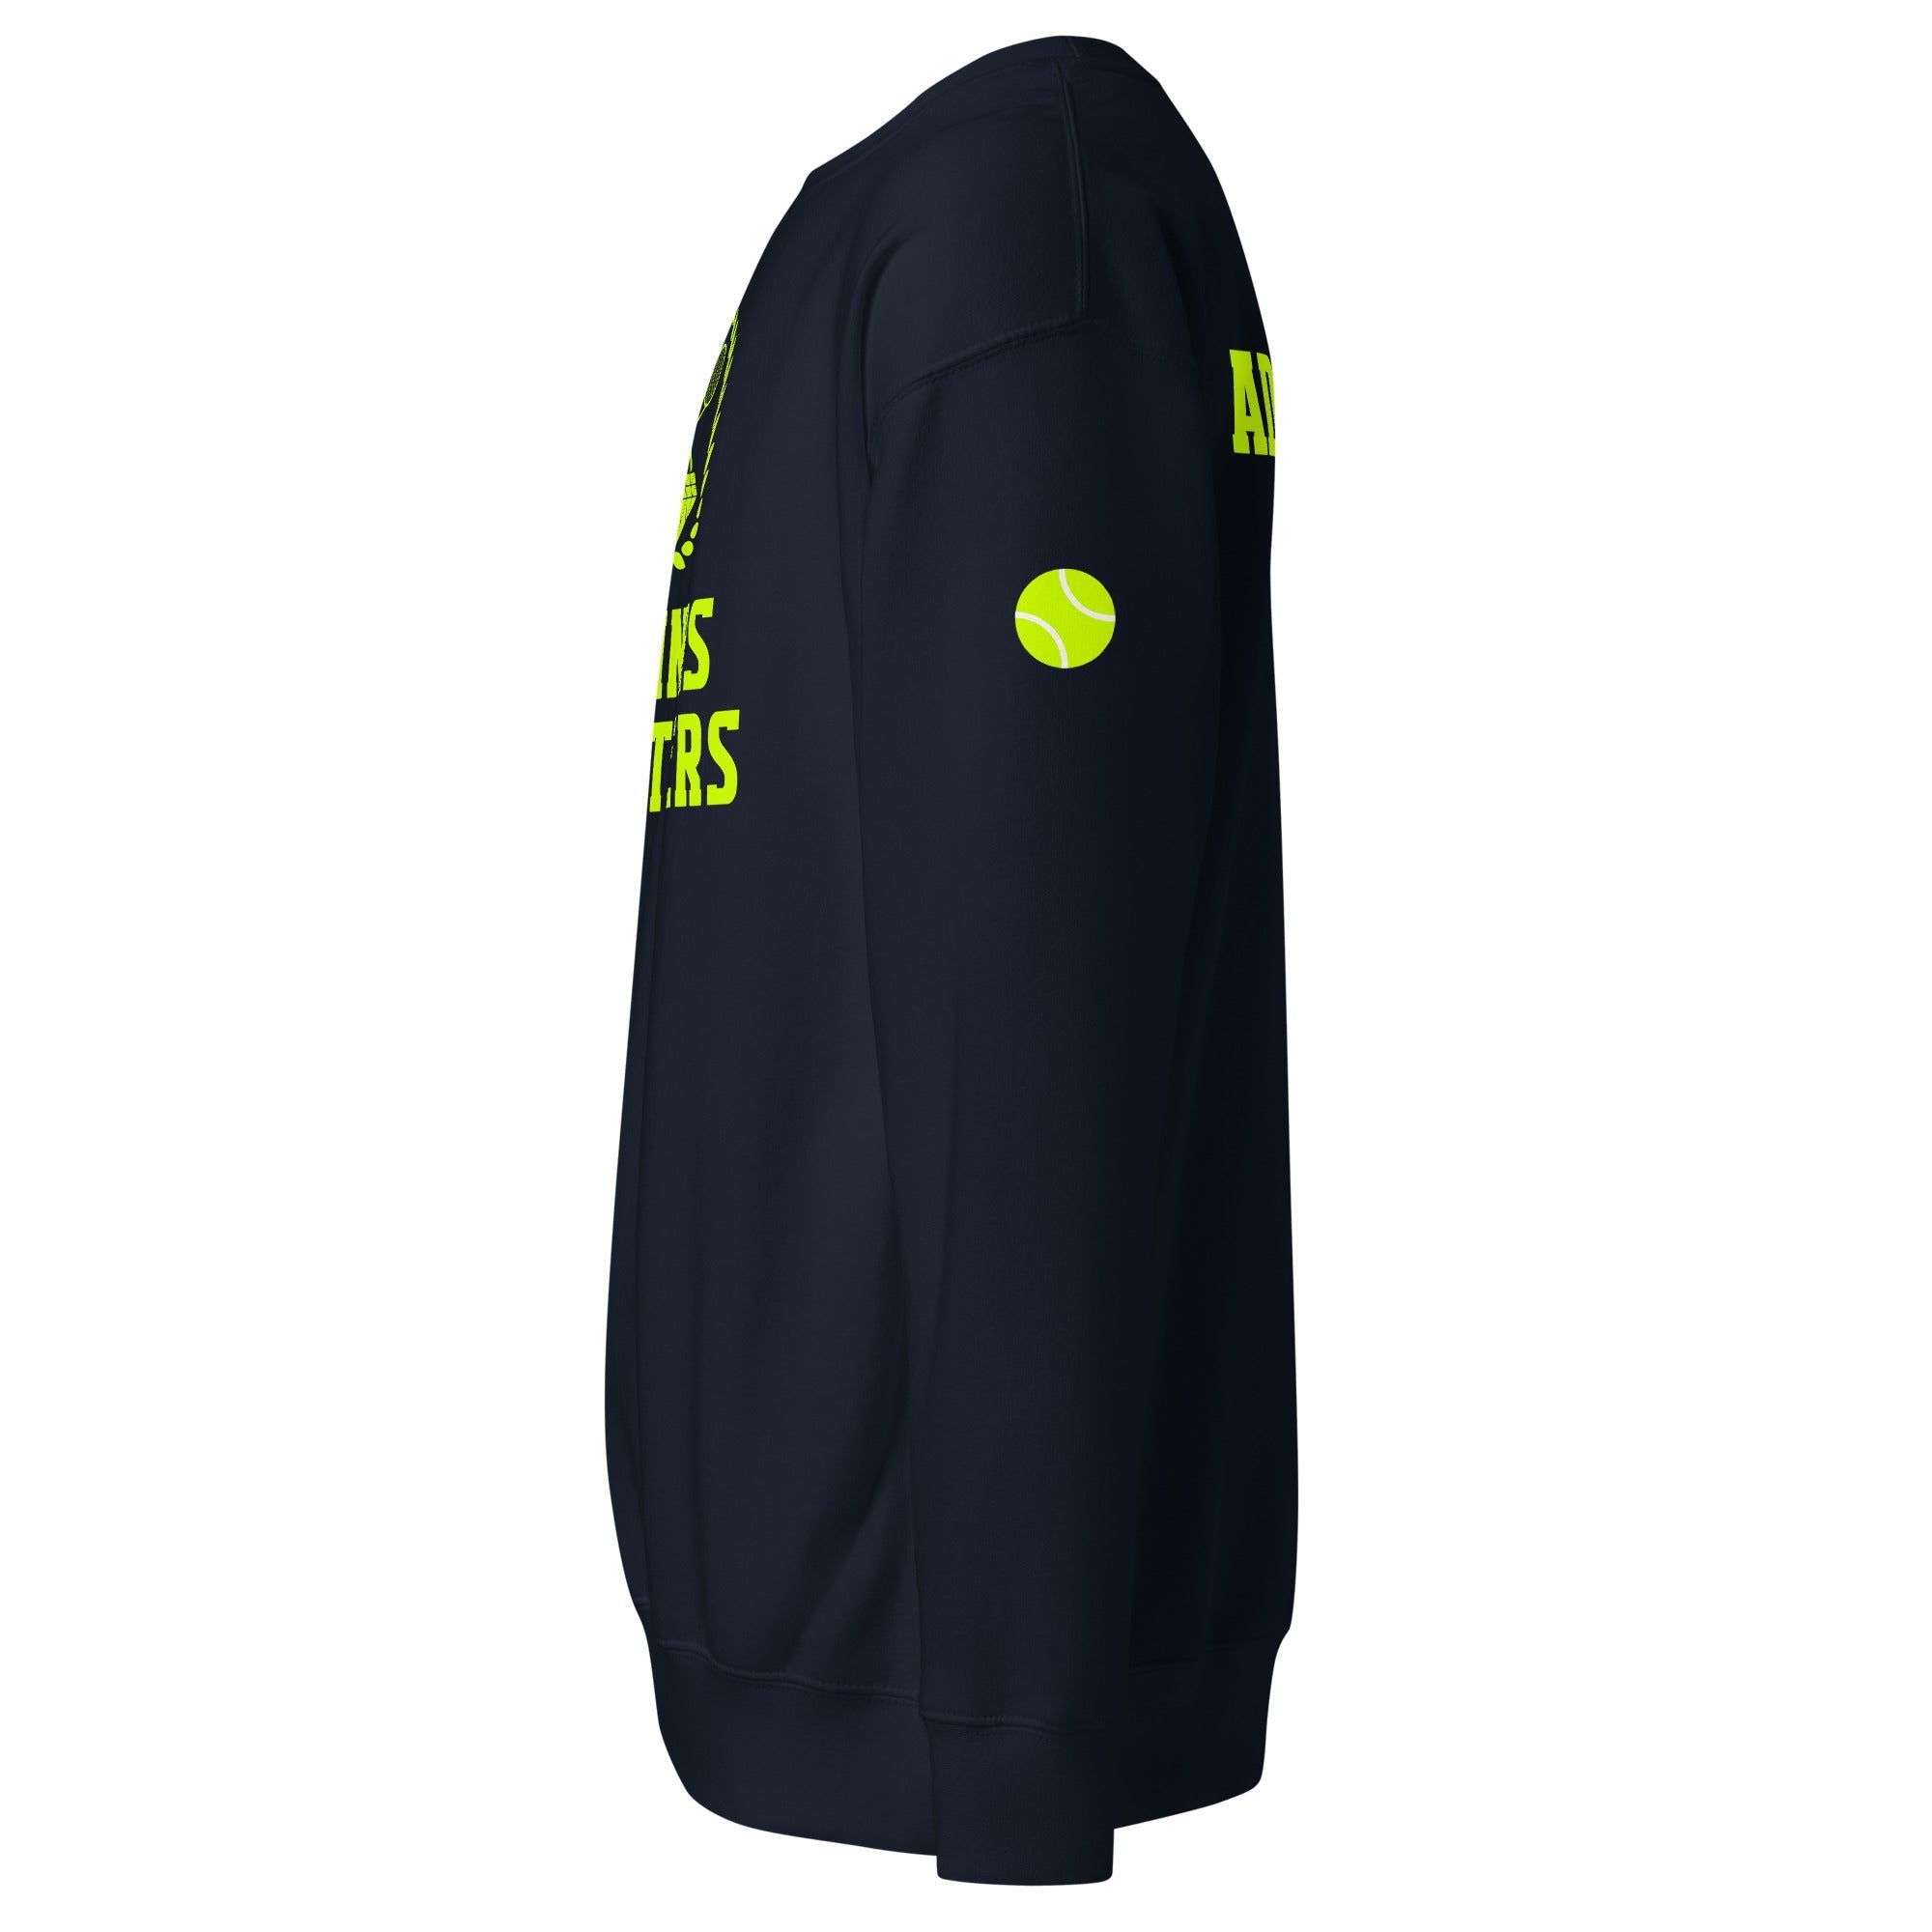 Unisex Premium Sweatshirt - Tennis Masters Adelaide - GRAPHIC T-SHIRTS